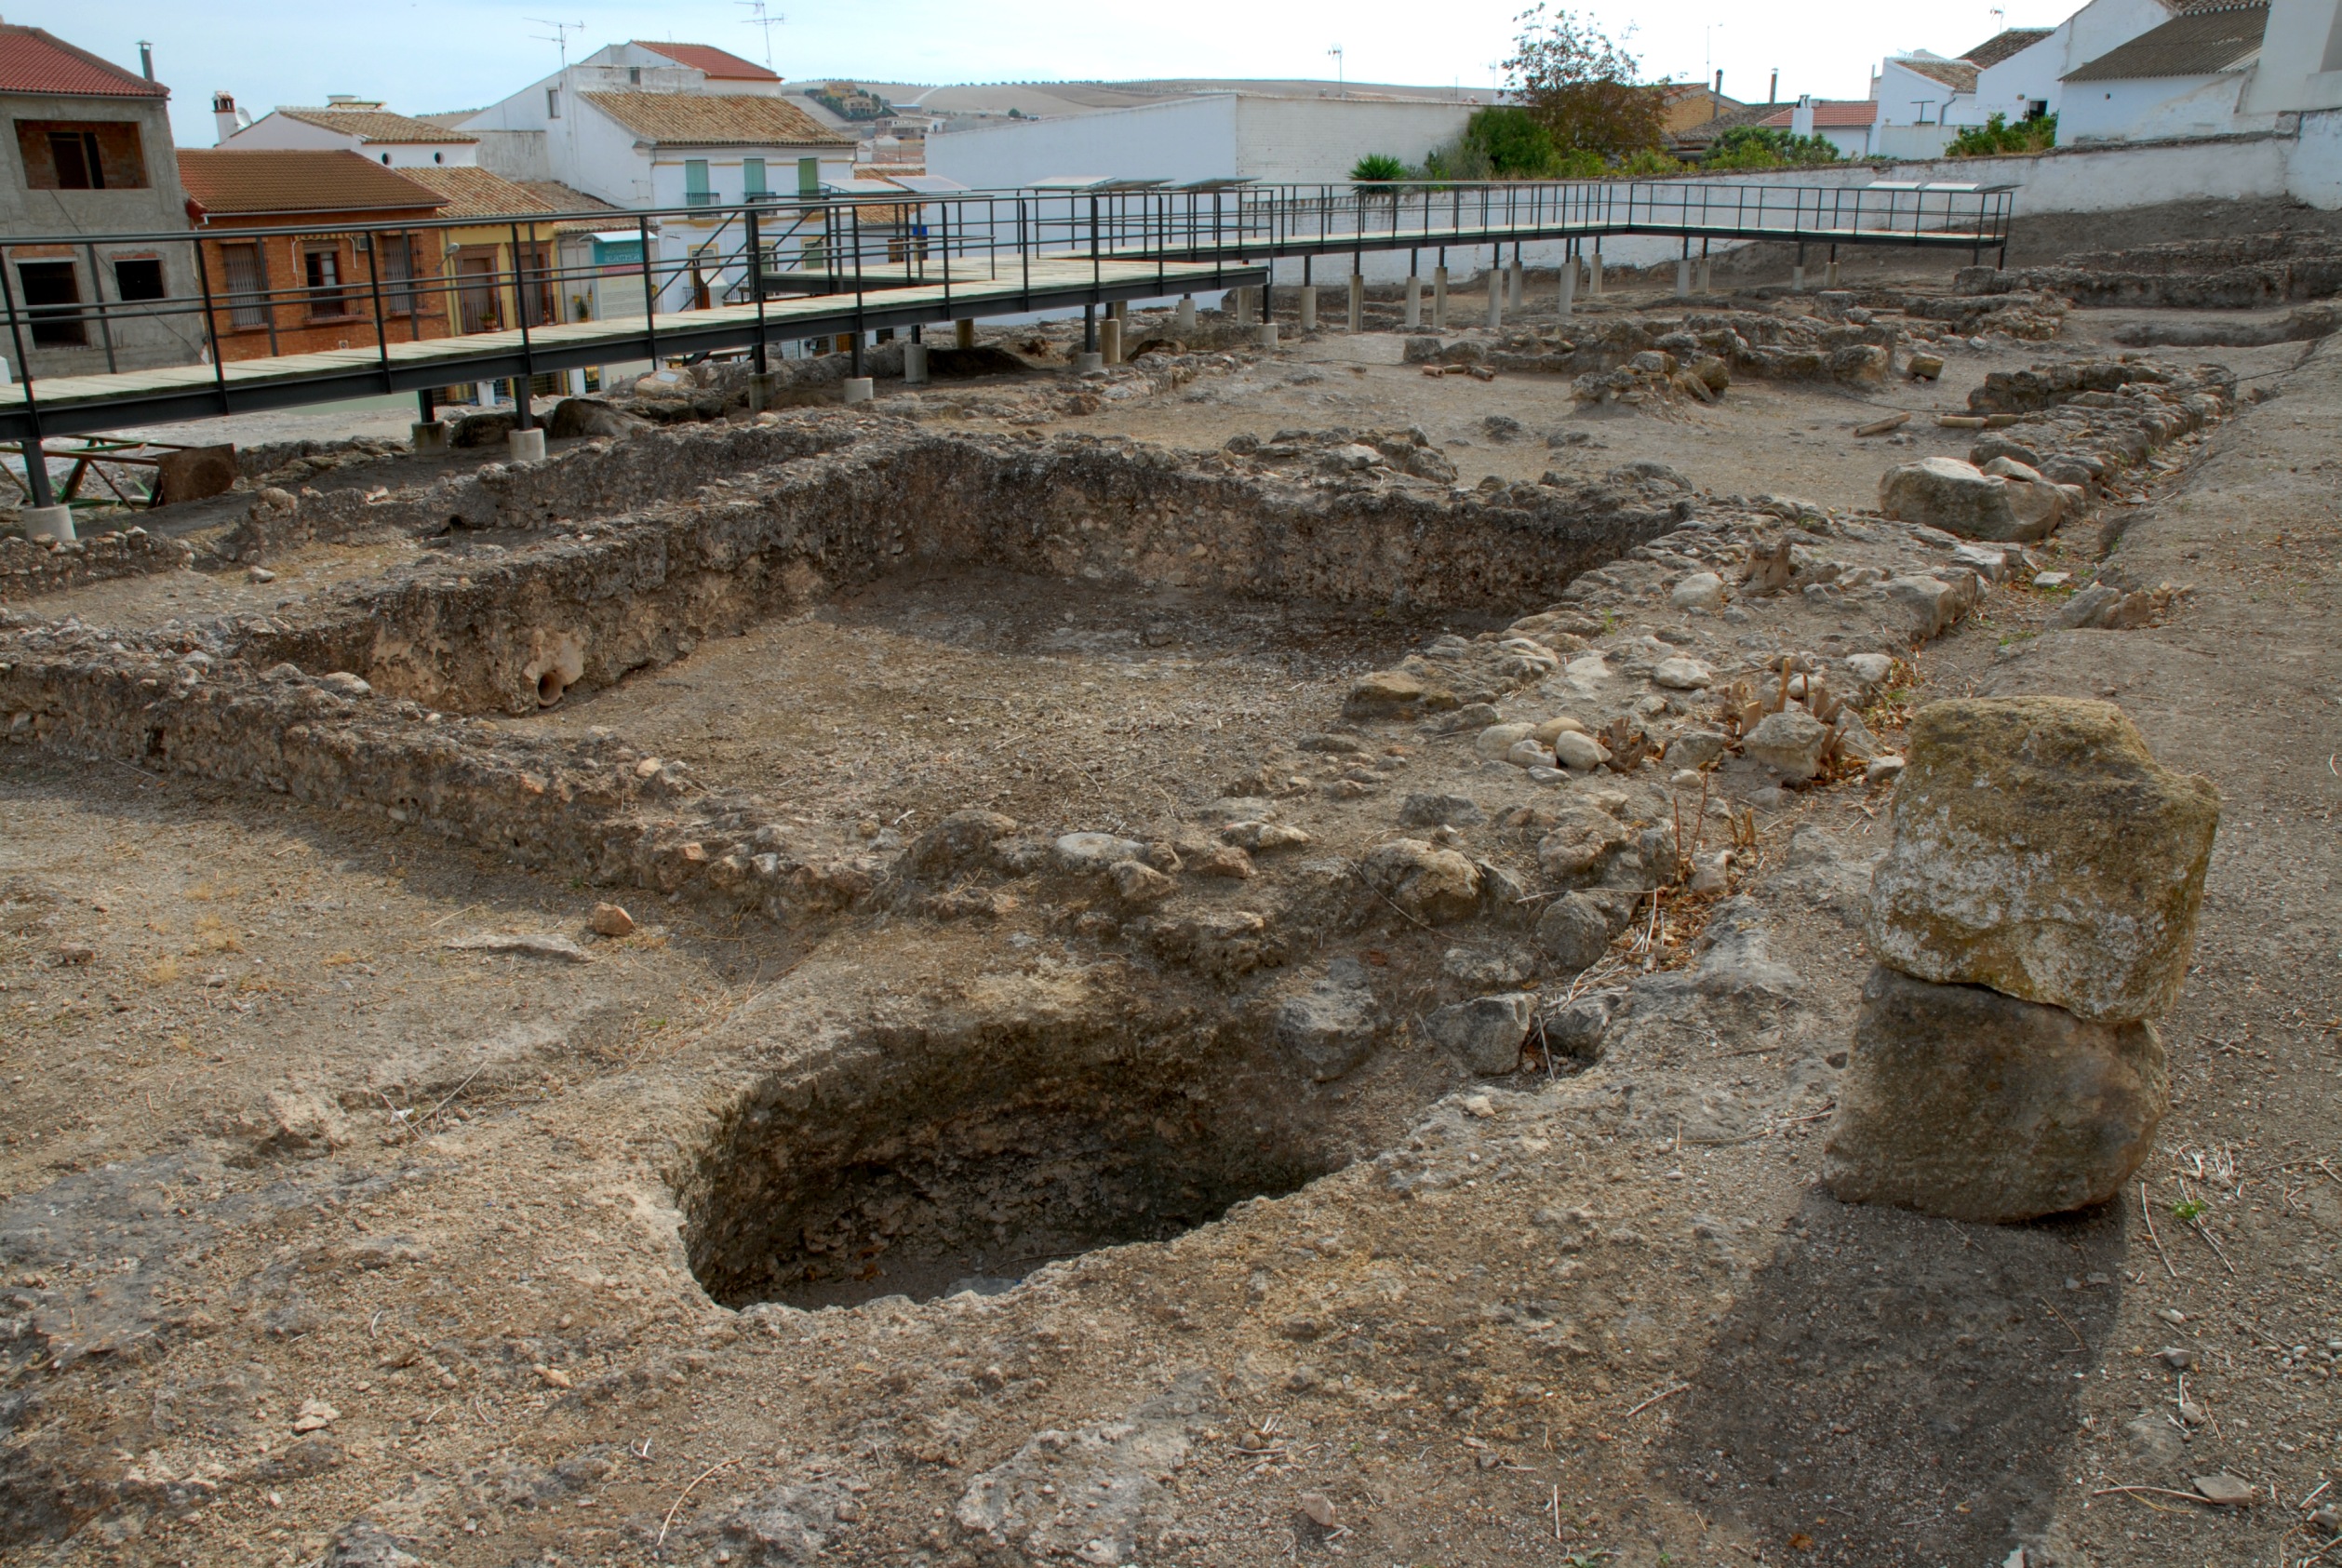 Yacimiento Arqueológico Termas Romanas, Silos y Necrópolis Calcolítica